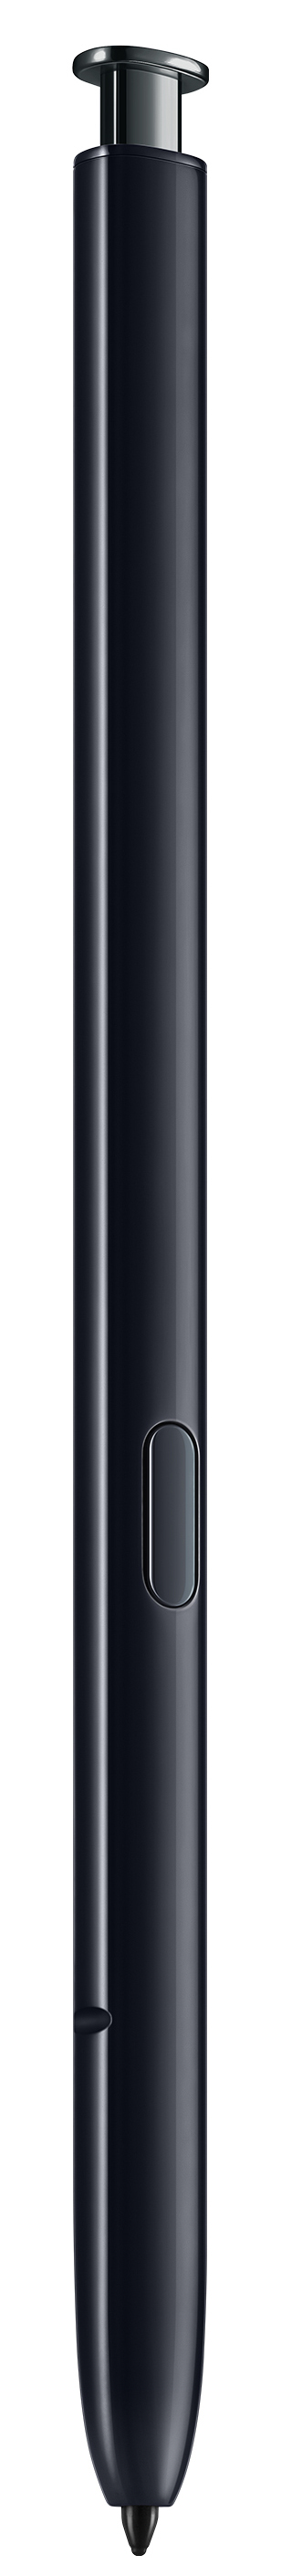 Samsung Galaxy Note10 Smartphone 256GB Aura Black